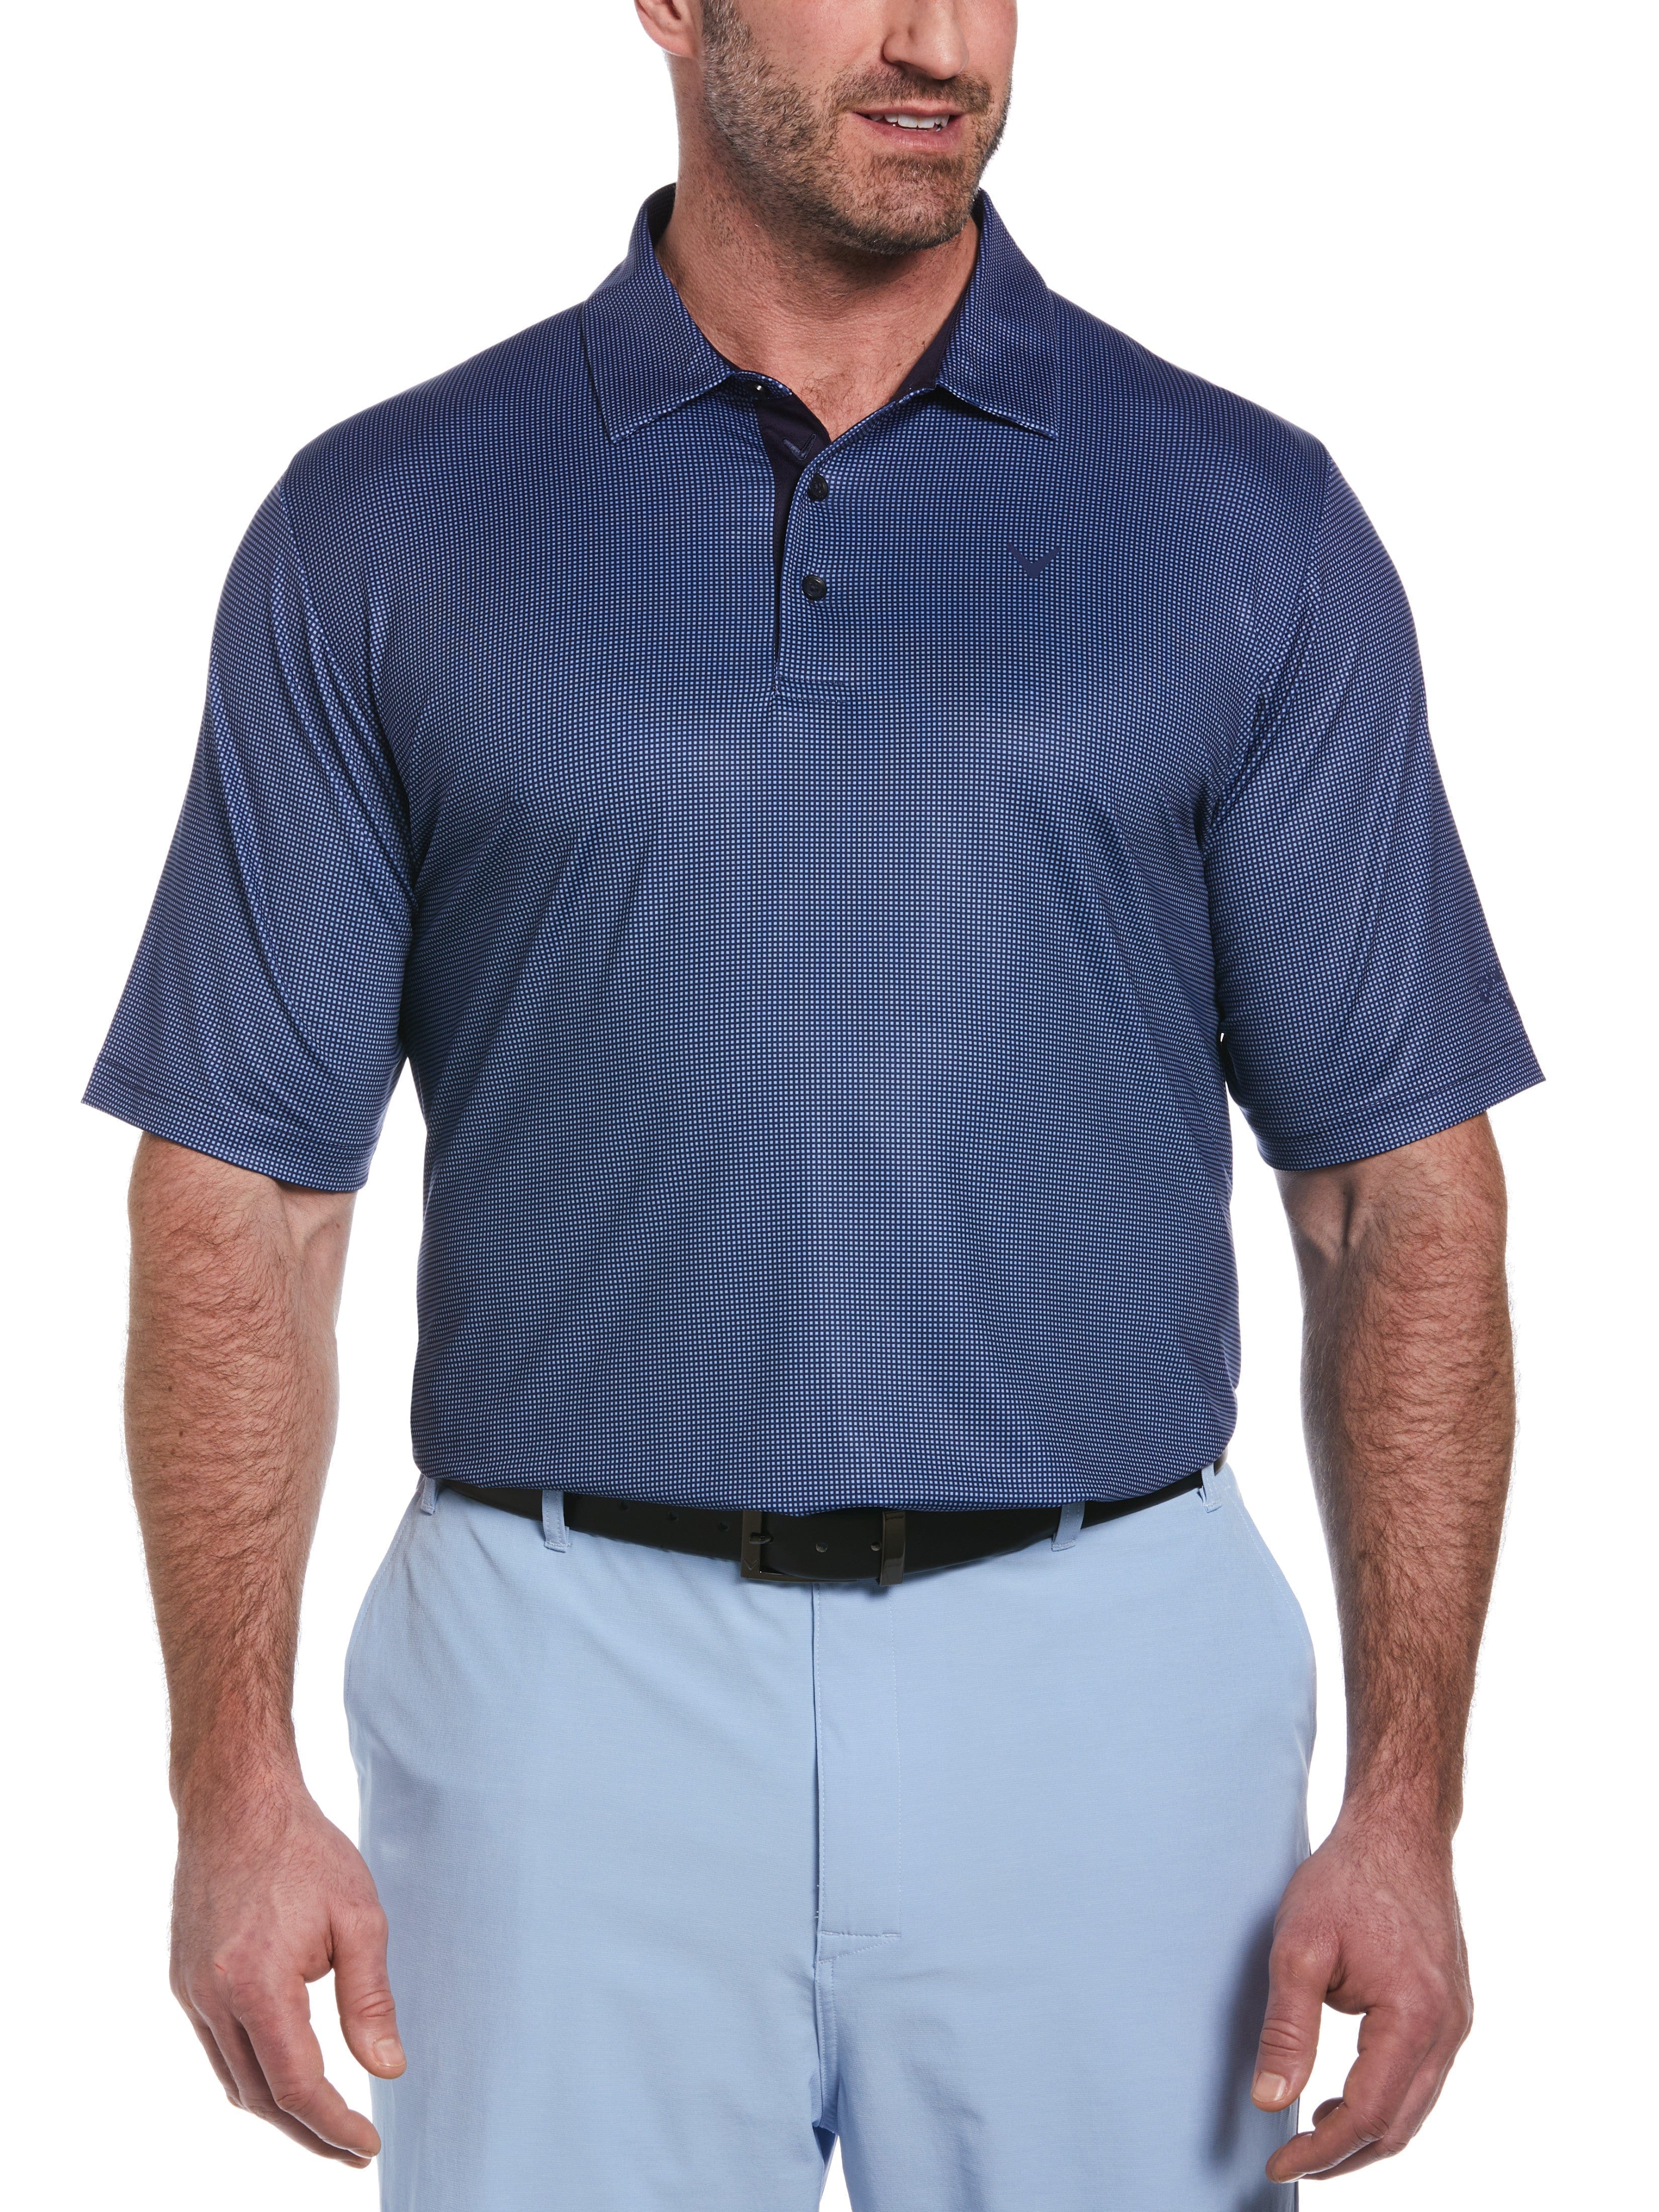 Callaway Apparel Mens Big & Tall Printed Gingham Swing Tech Polo Shirt, Size 1X, Navy Blue, Polyester/Elastane | Golf Apparel Shop